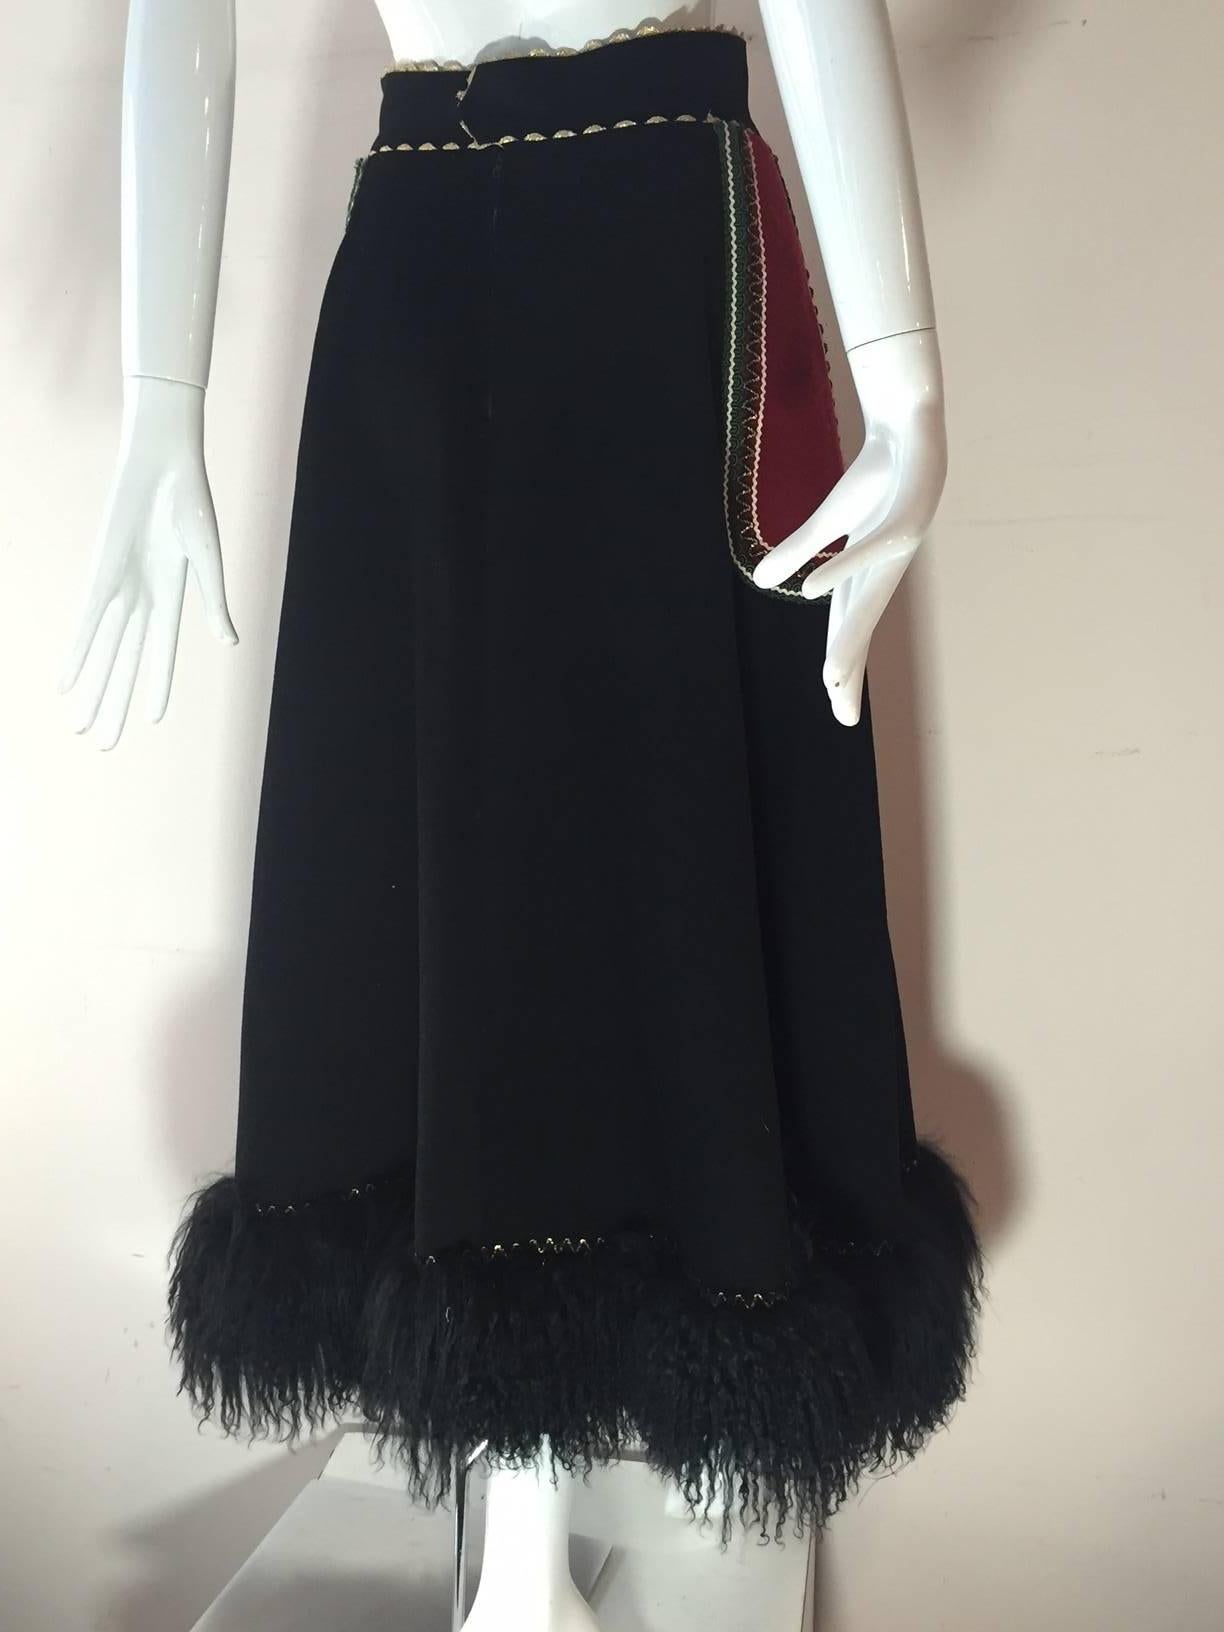 Black 1940s Wool Felt Folkloric Skirt w/ RicRac and Floral Applique Trim - Fur Hem